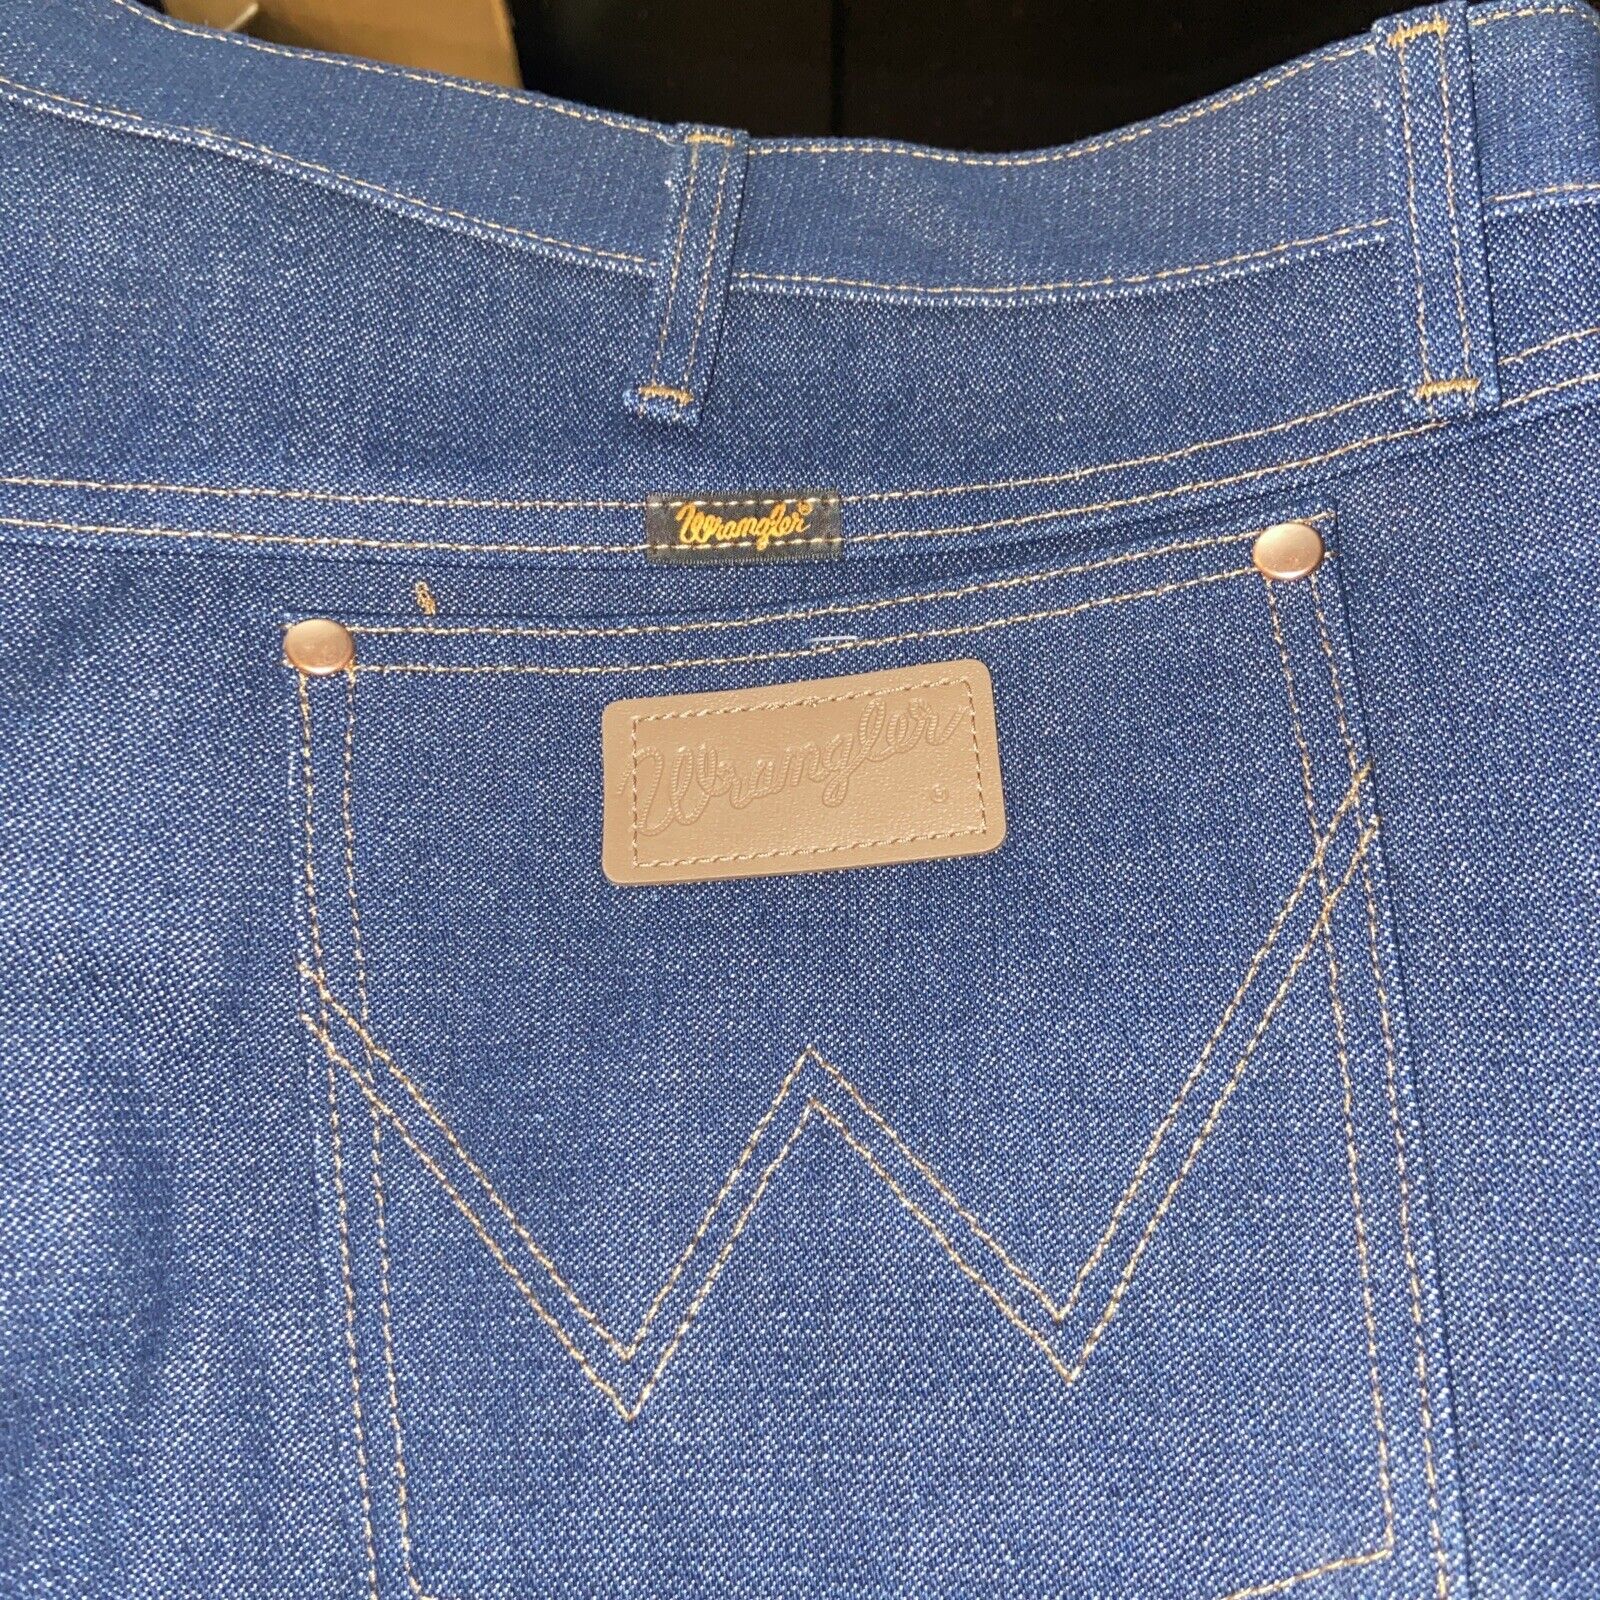 Wrangler Cowboy Jeans 46x34 13MWZ A001 Mens Jeans Indigo | eBay